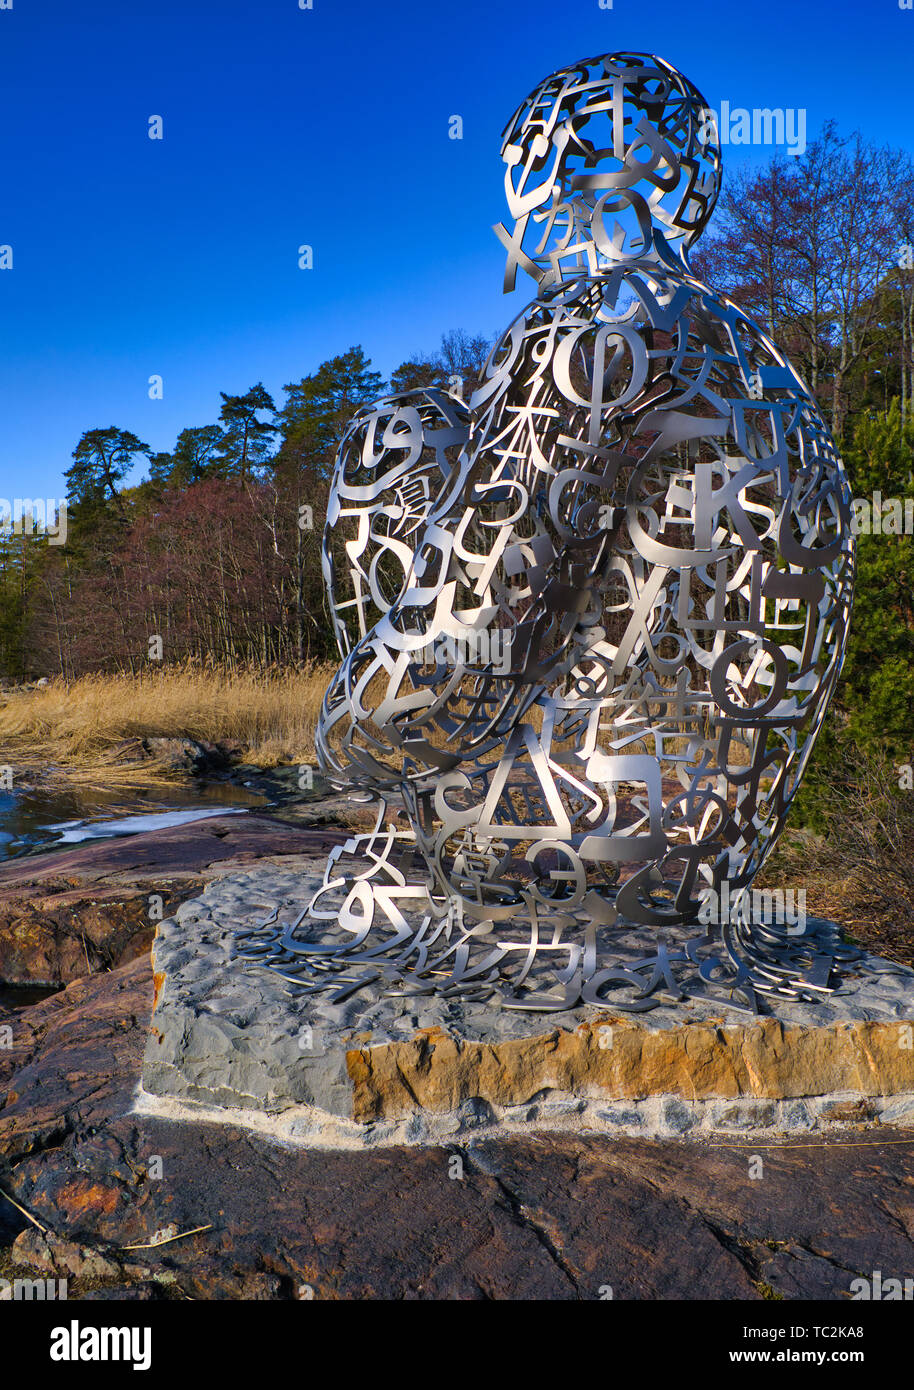 Metal sculpture by Spanish sculptor Jaume Plensa, Artipelag, Halludden peninsula, Varmdo, Stockholm archipelago, Sweden, Scandinavia Stock Photo